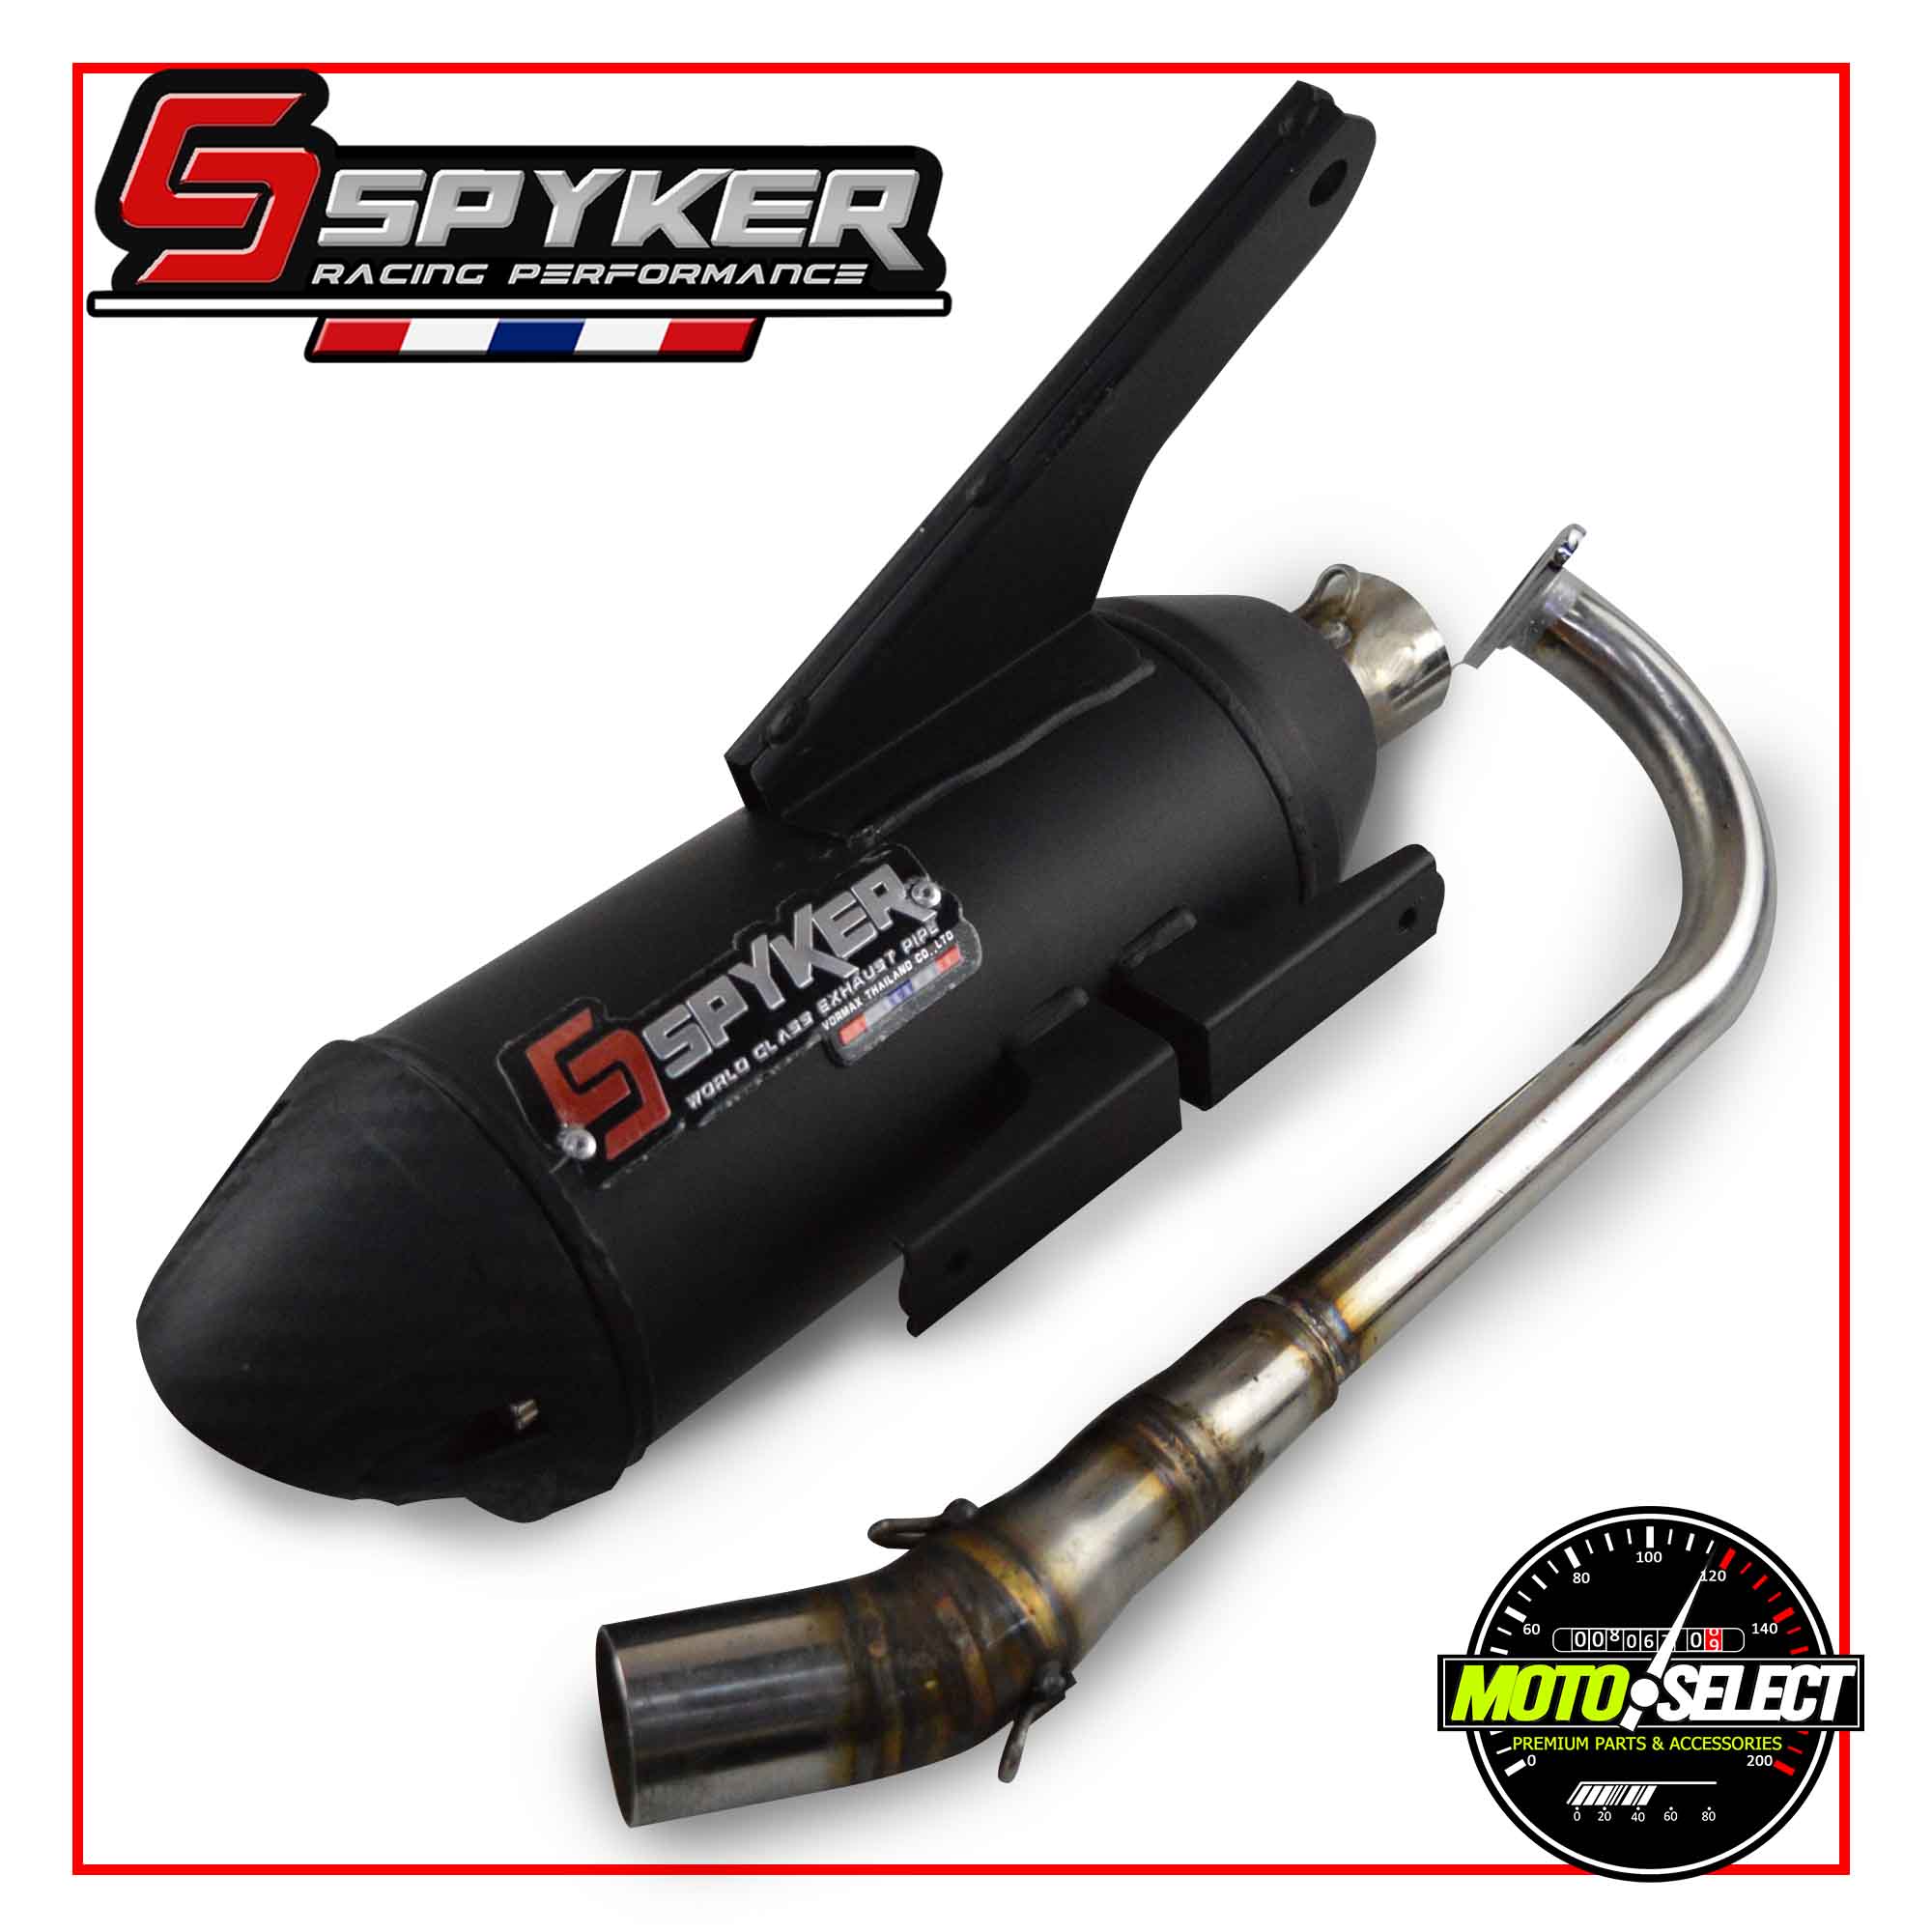 Spyker Power Muffler V3 Full System Exhaust For Yamaha Mio Mxi Moto Select Lazada Ph